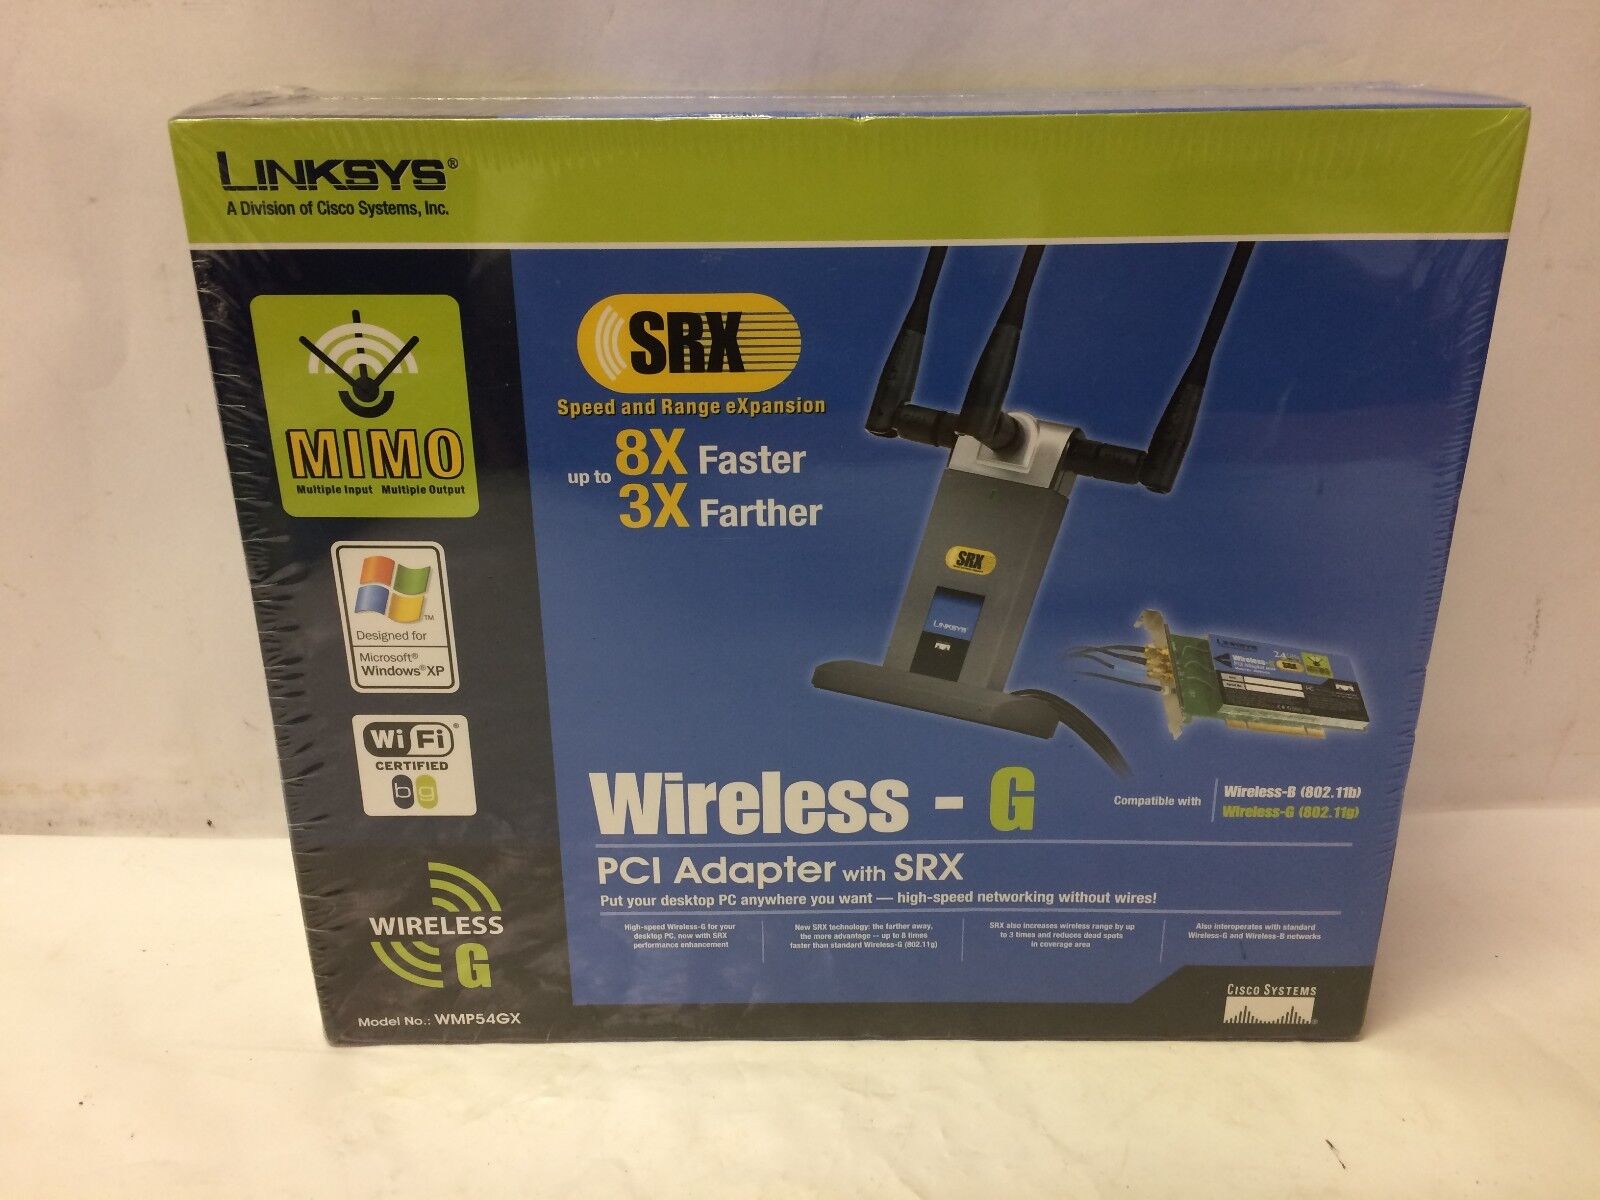 Cisco-Linksys WMP54GX Wireless G PCI Adapter with SRX sealed